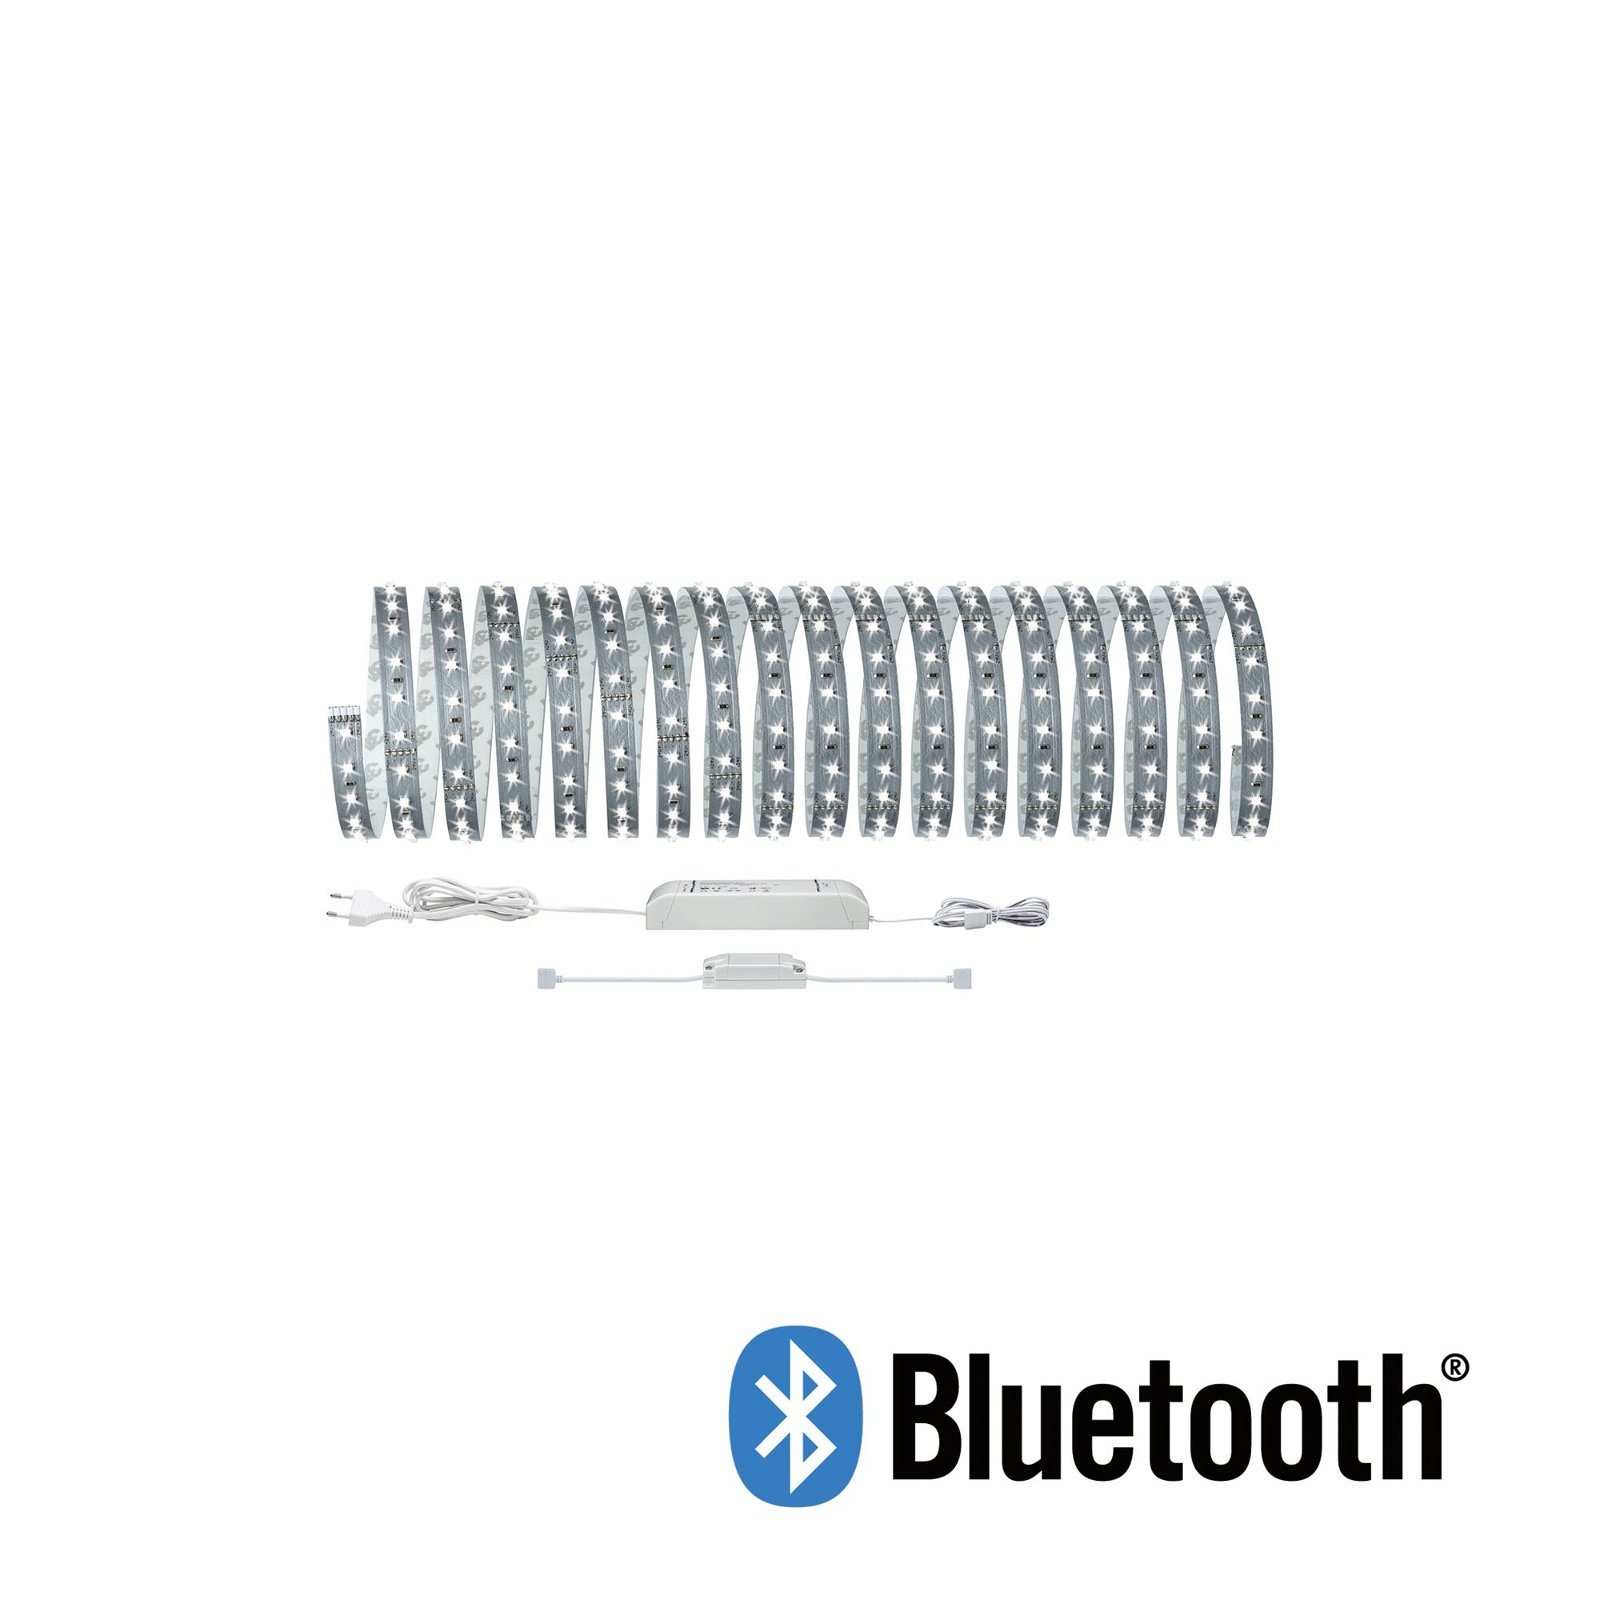 MaxLED 500 LED Strip Smart Home Bluetooth Daglichtwit Basisset 10m 50W 550lm/m 6500K 75VA